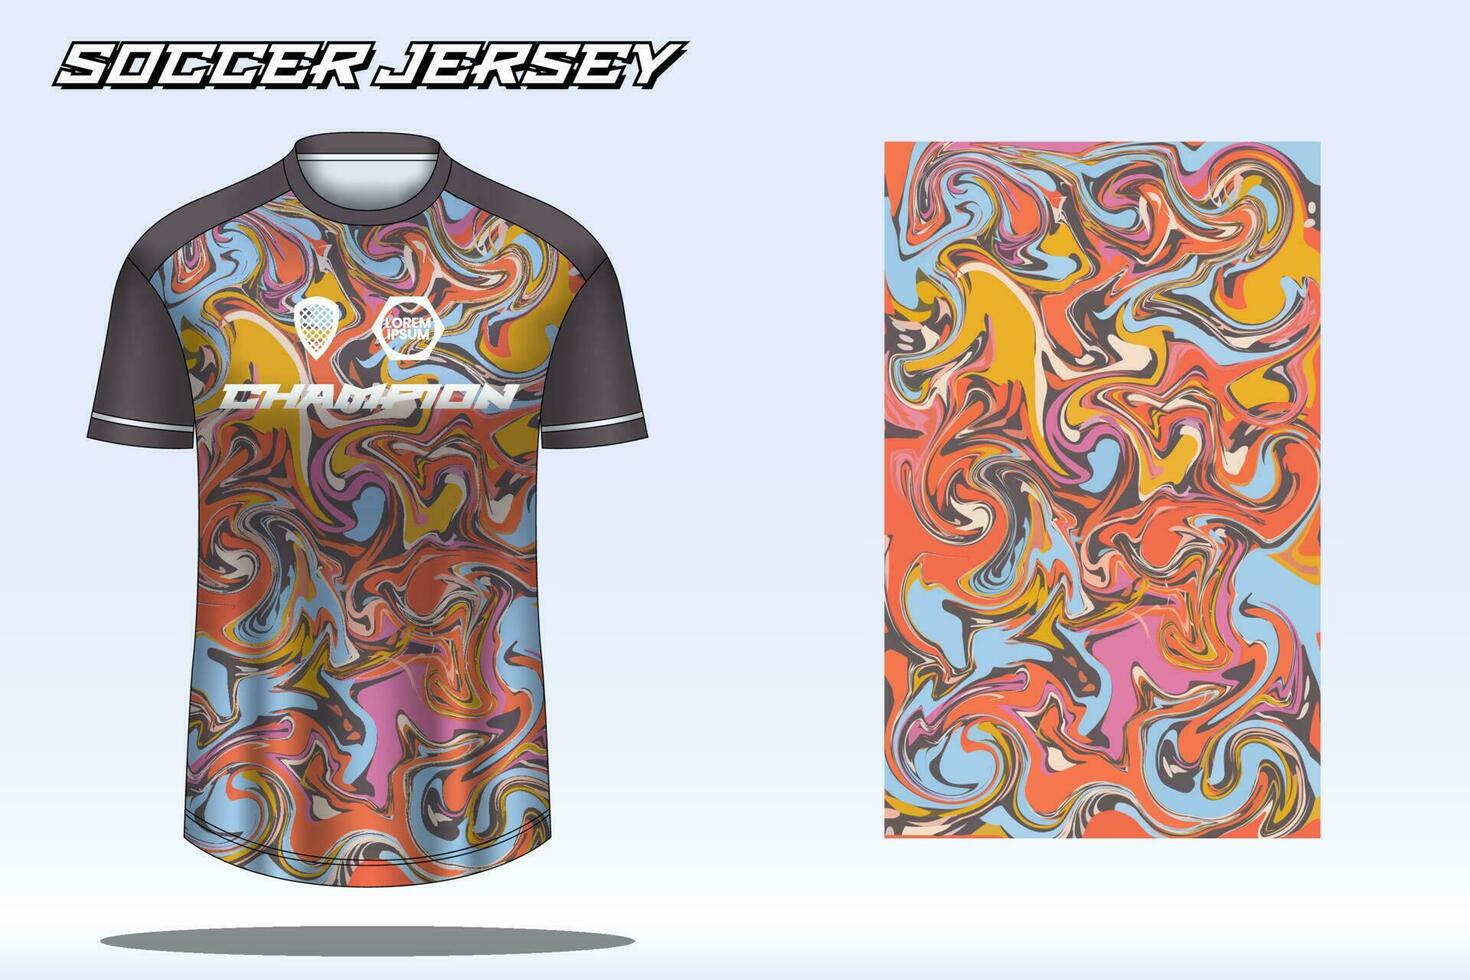 voetbal Jersey sport t-shirt ontwerp mockup voor Amerikaans voetbal club vector